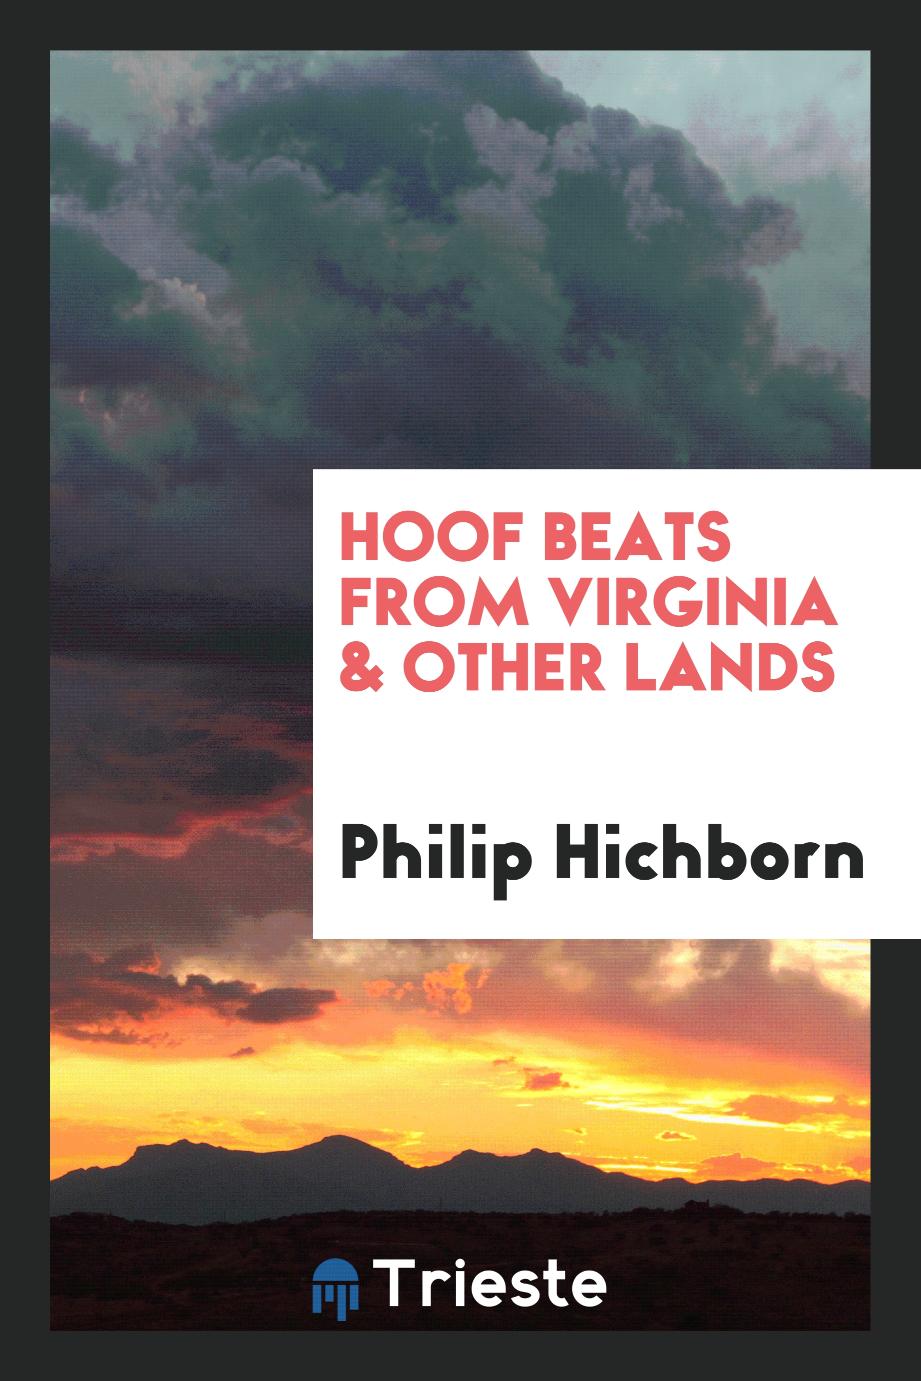 Hoof beats from Virginia & other lands